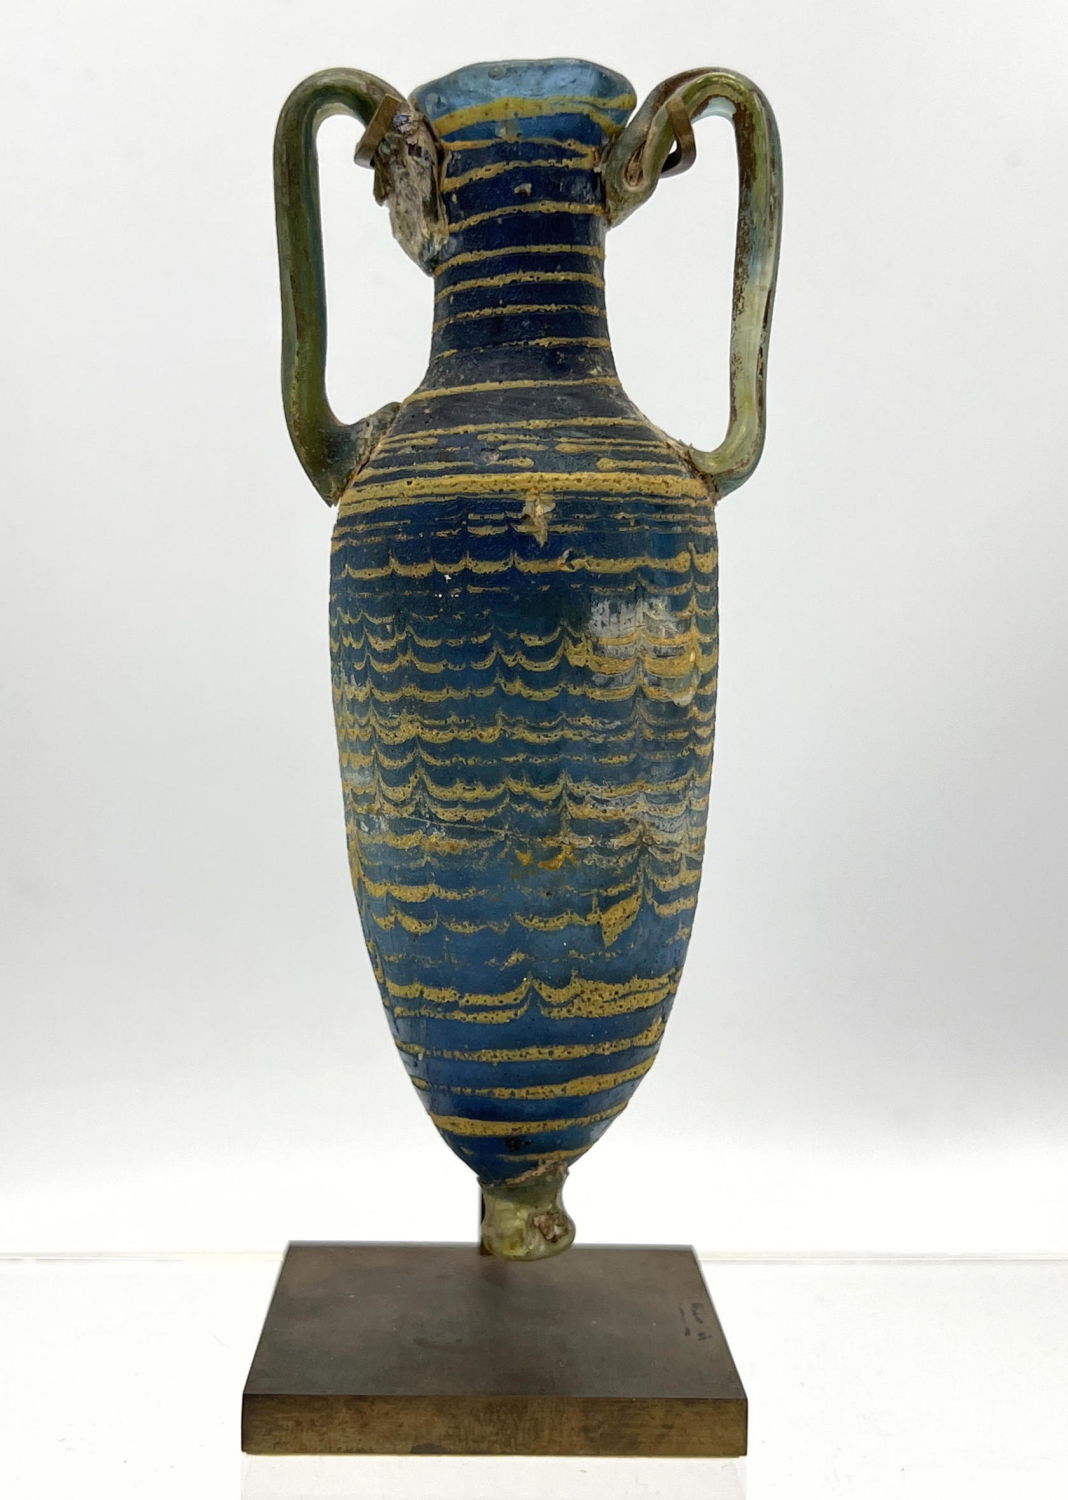 Unusual turquoise amphora vessel